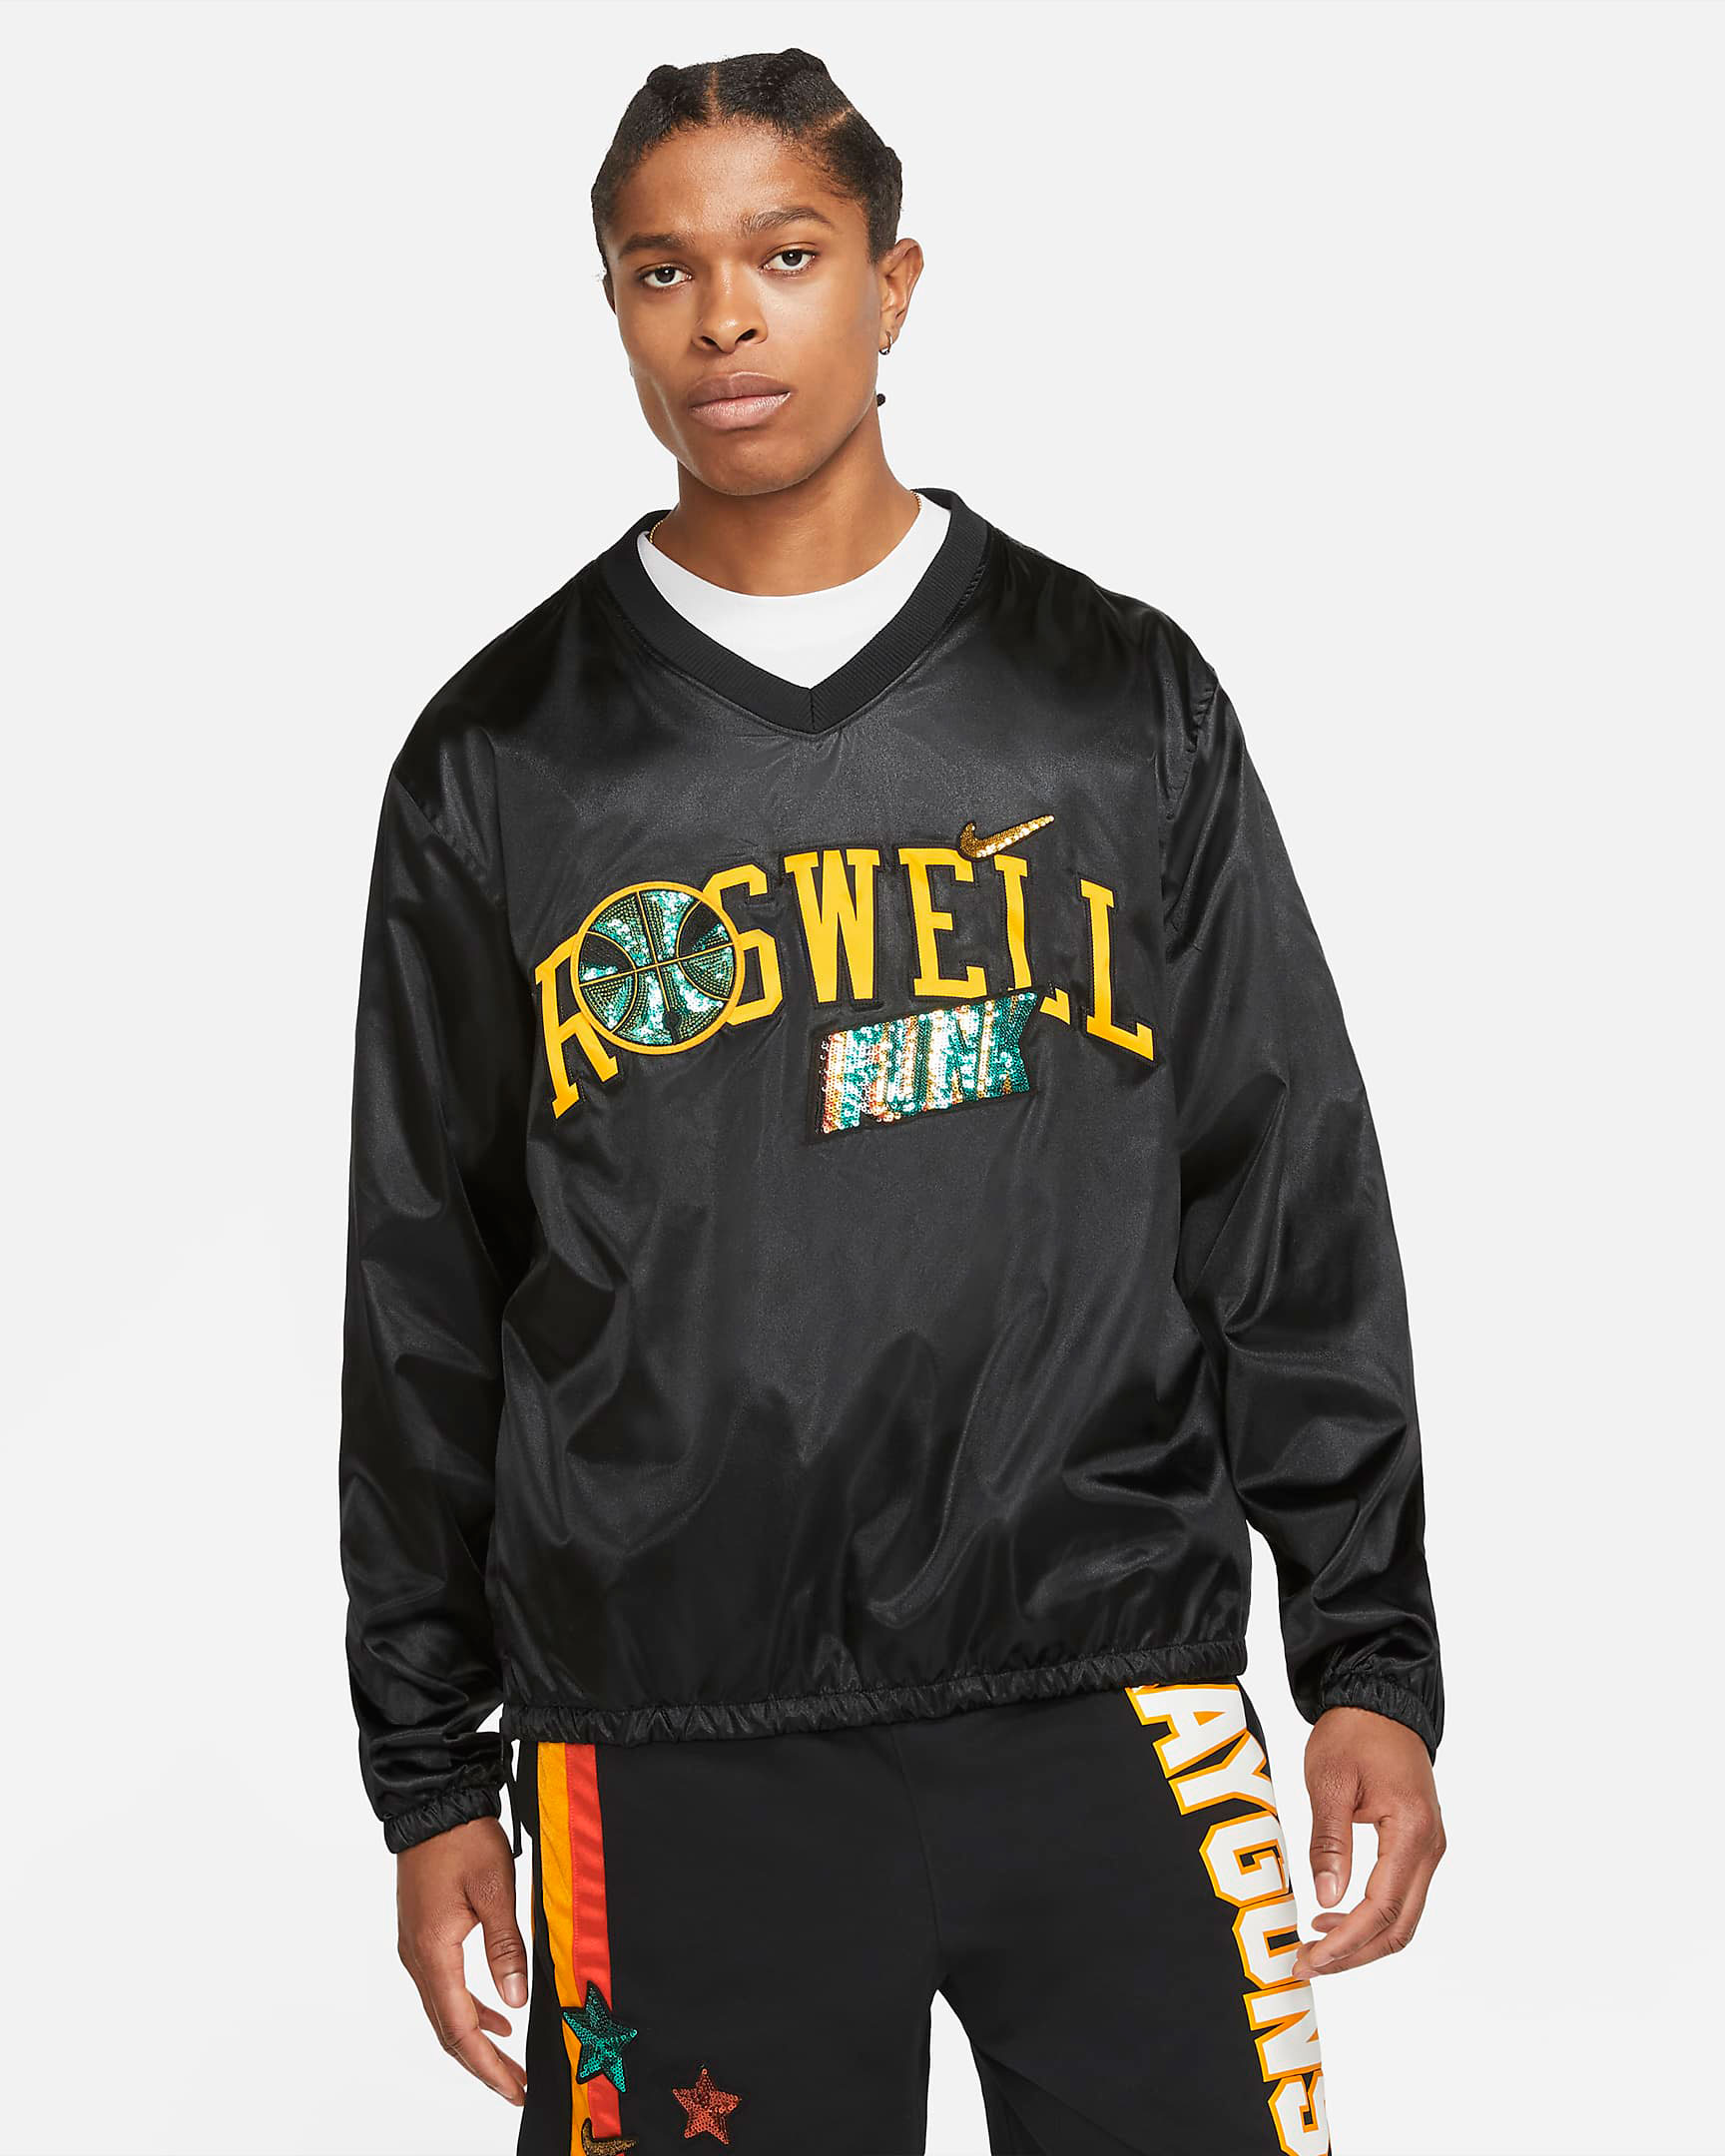 nike-roswell-rayguns-basketball-top